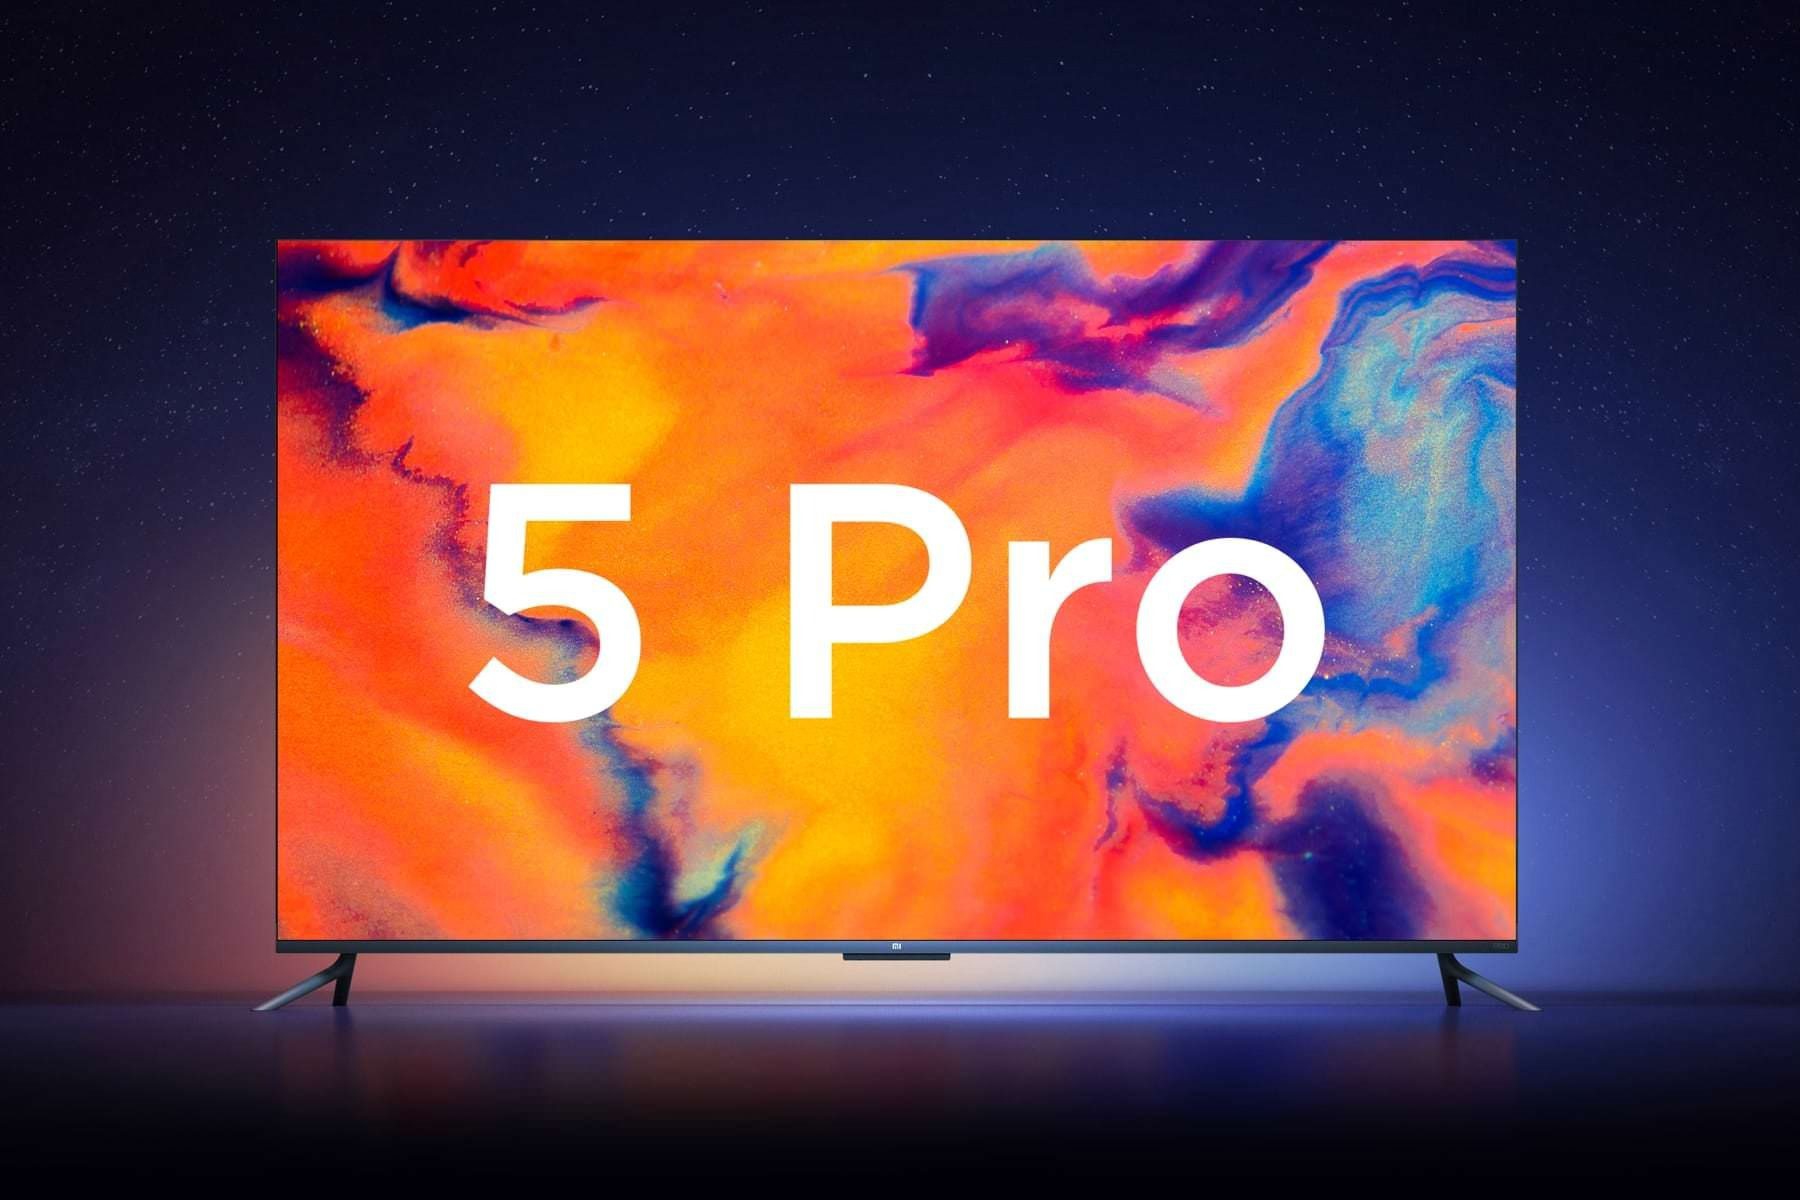 Телевизор Xiaomi 5 55 Дюймов